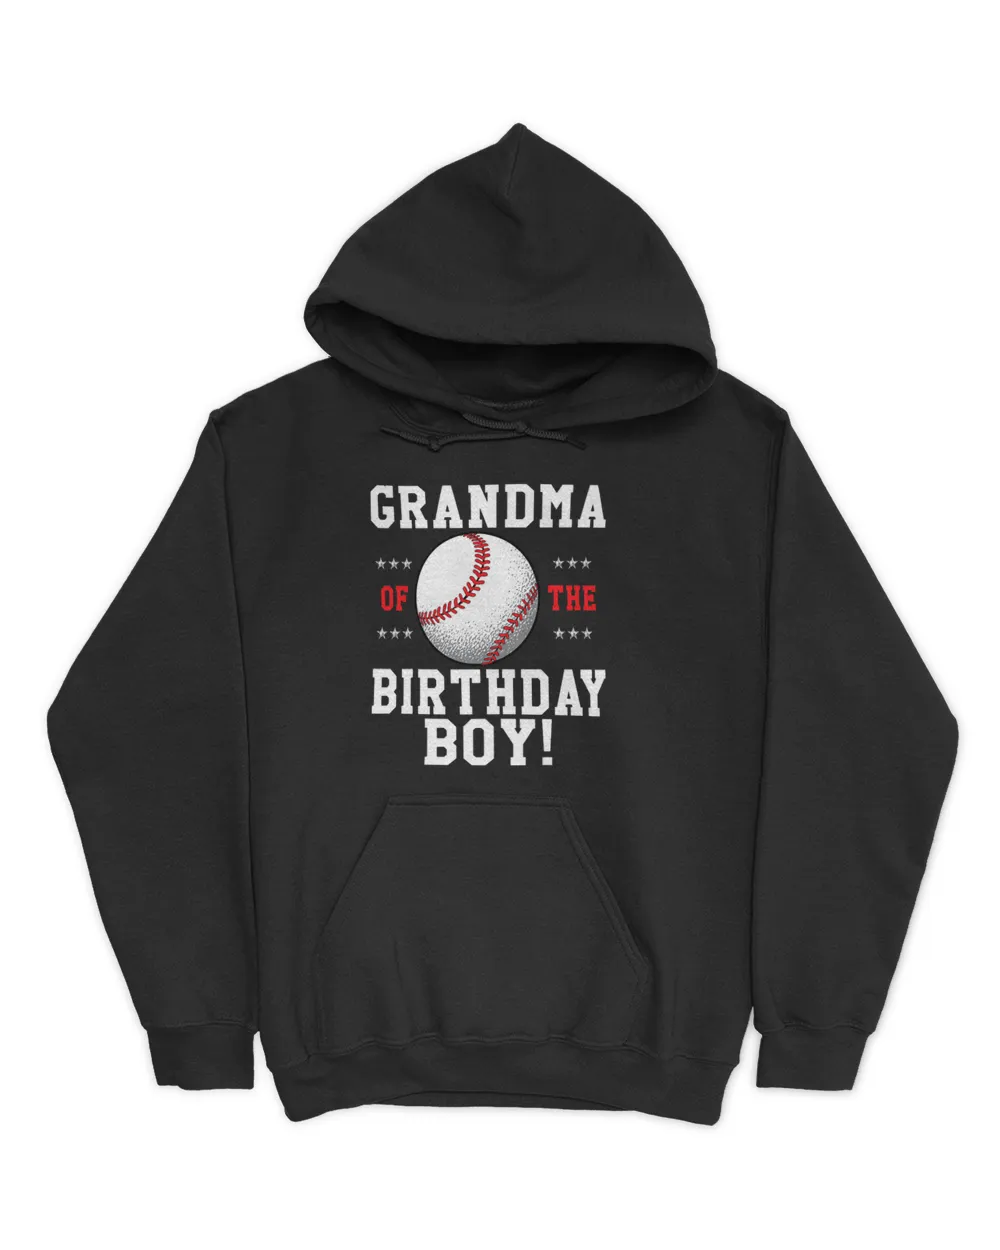 Grandma Of The Birthday Boy Baseball Matching Family Party